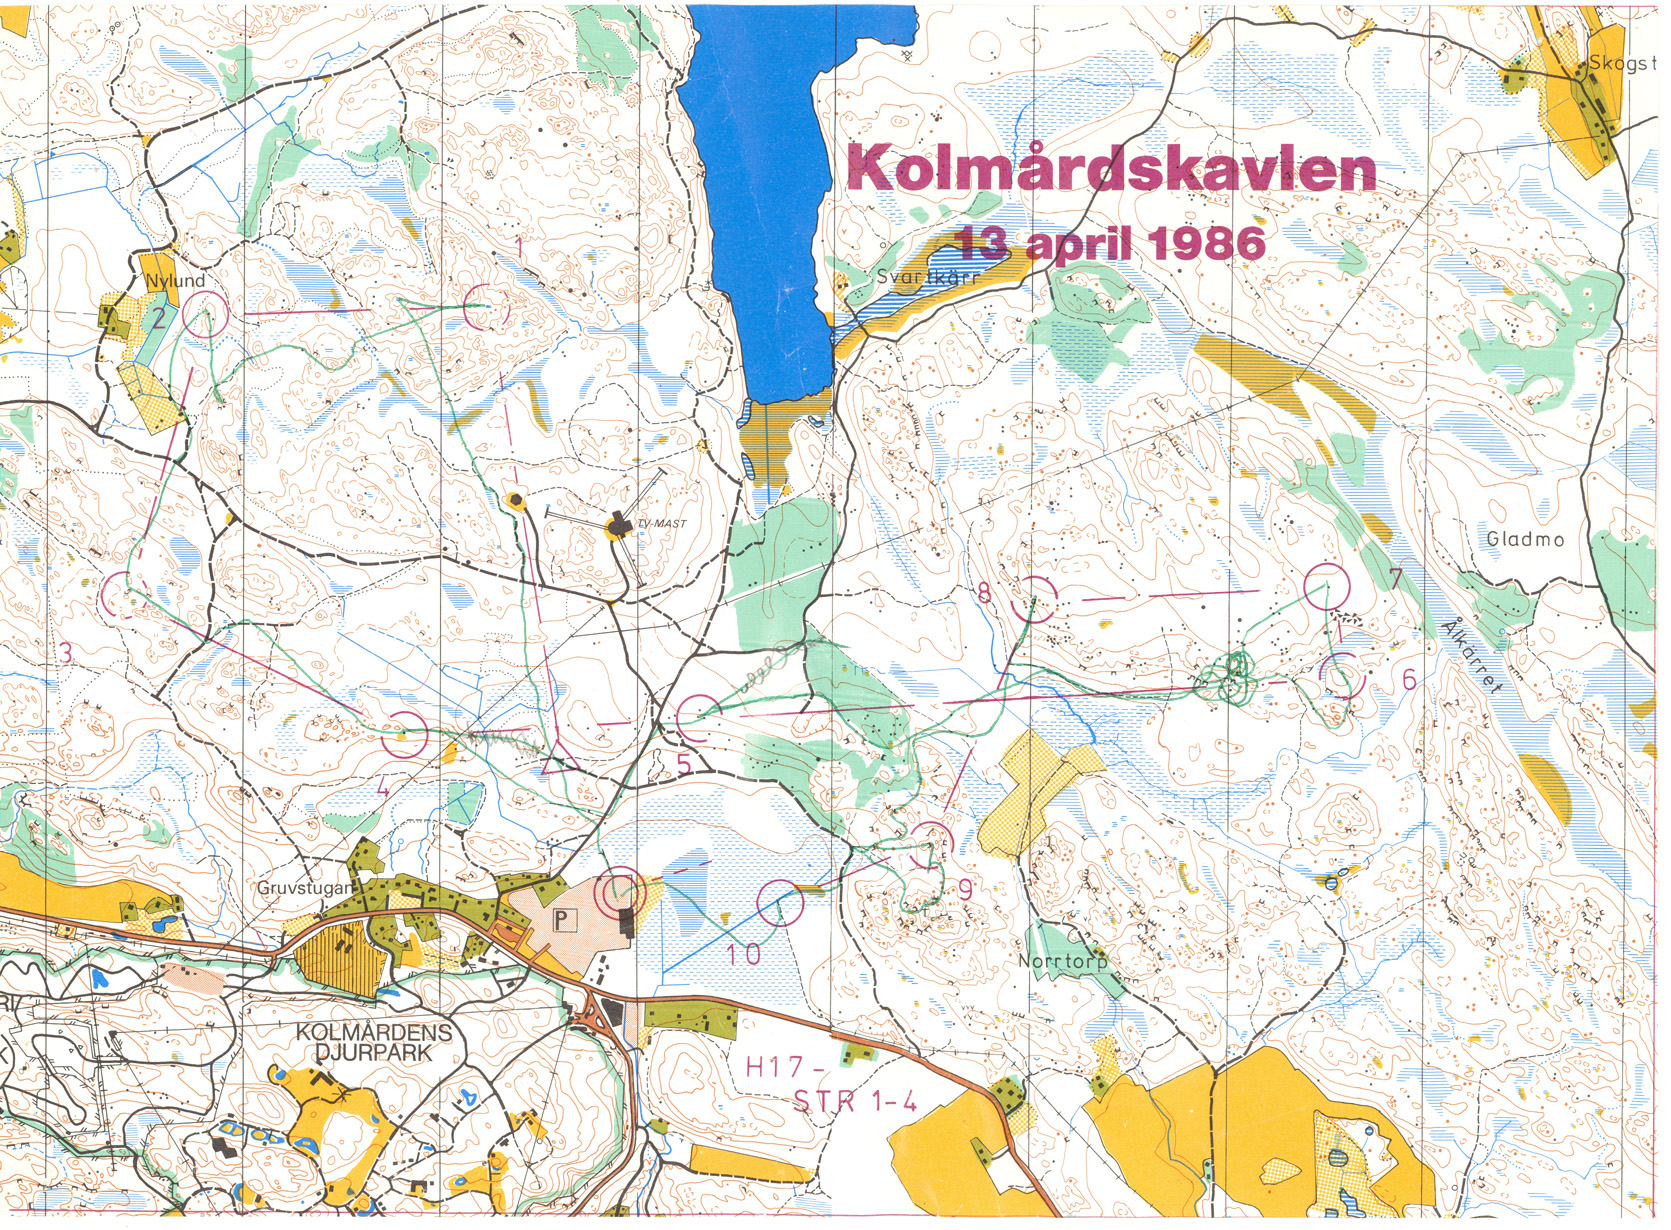 Kolmårdskavlen (13.04.1986)